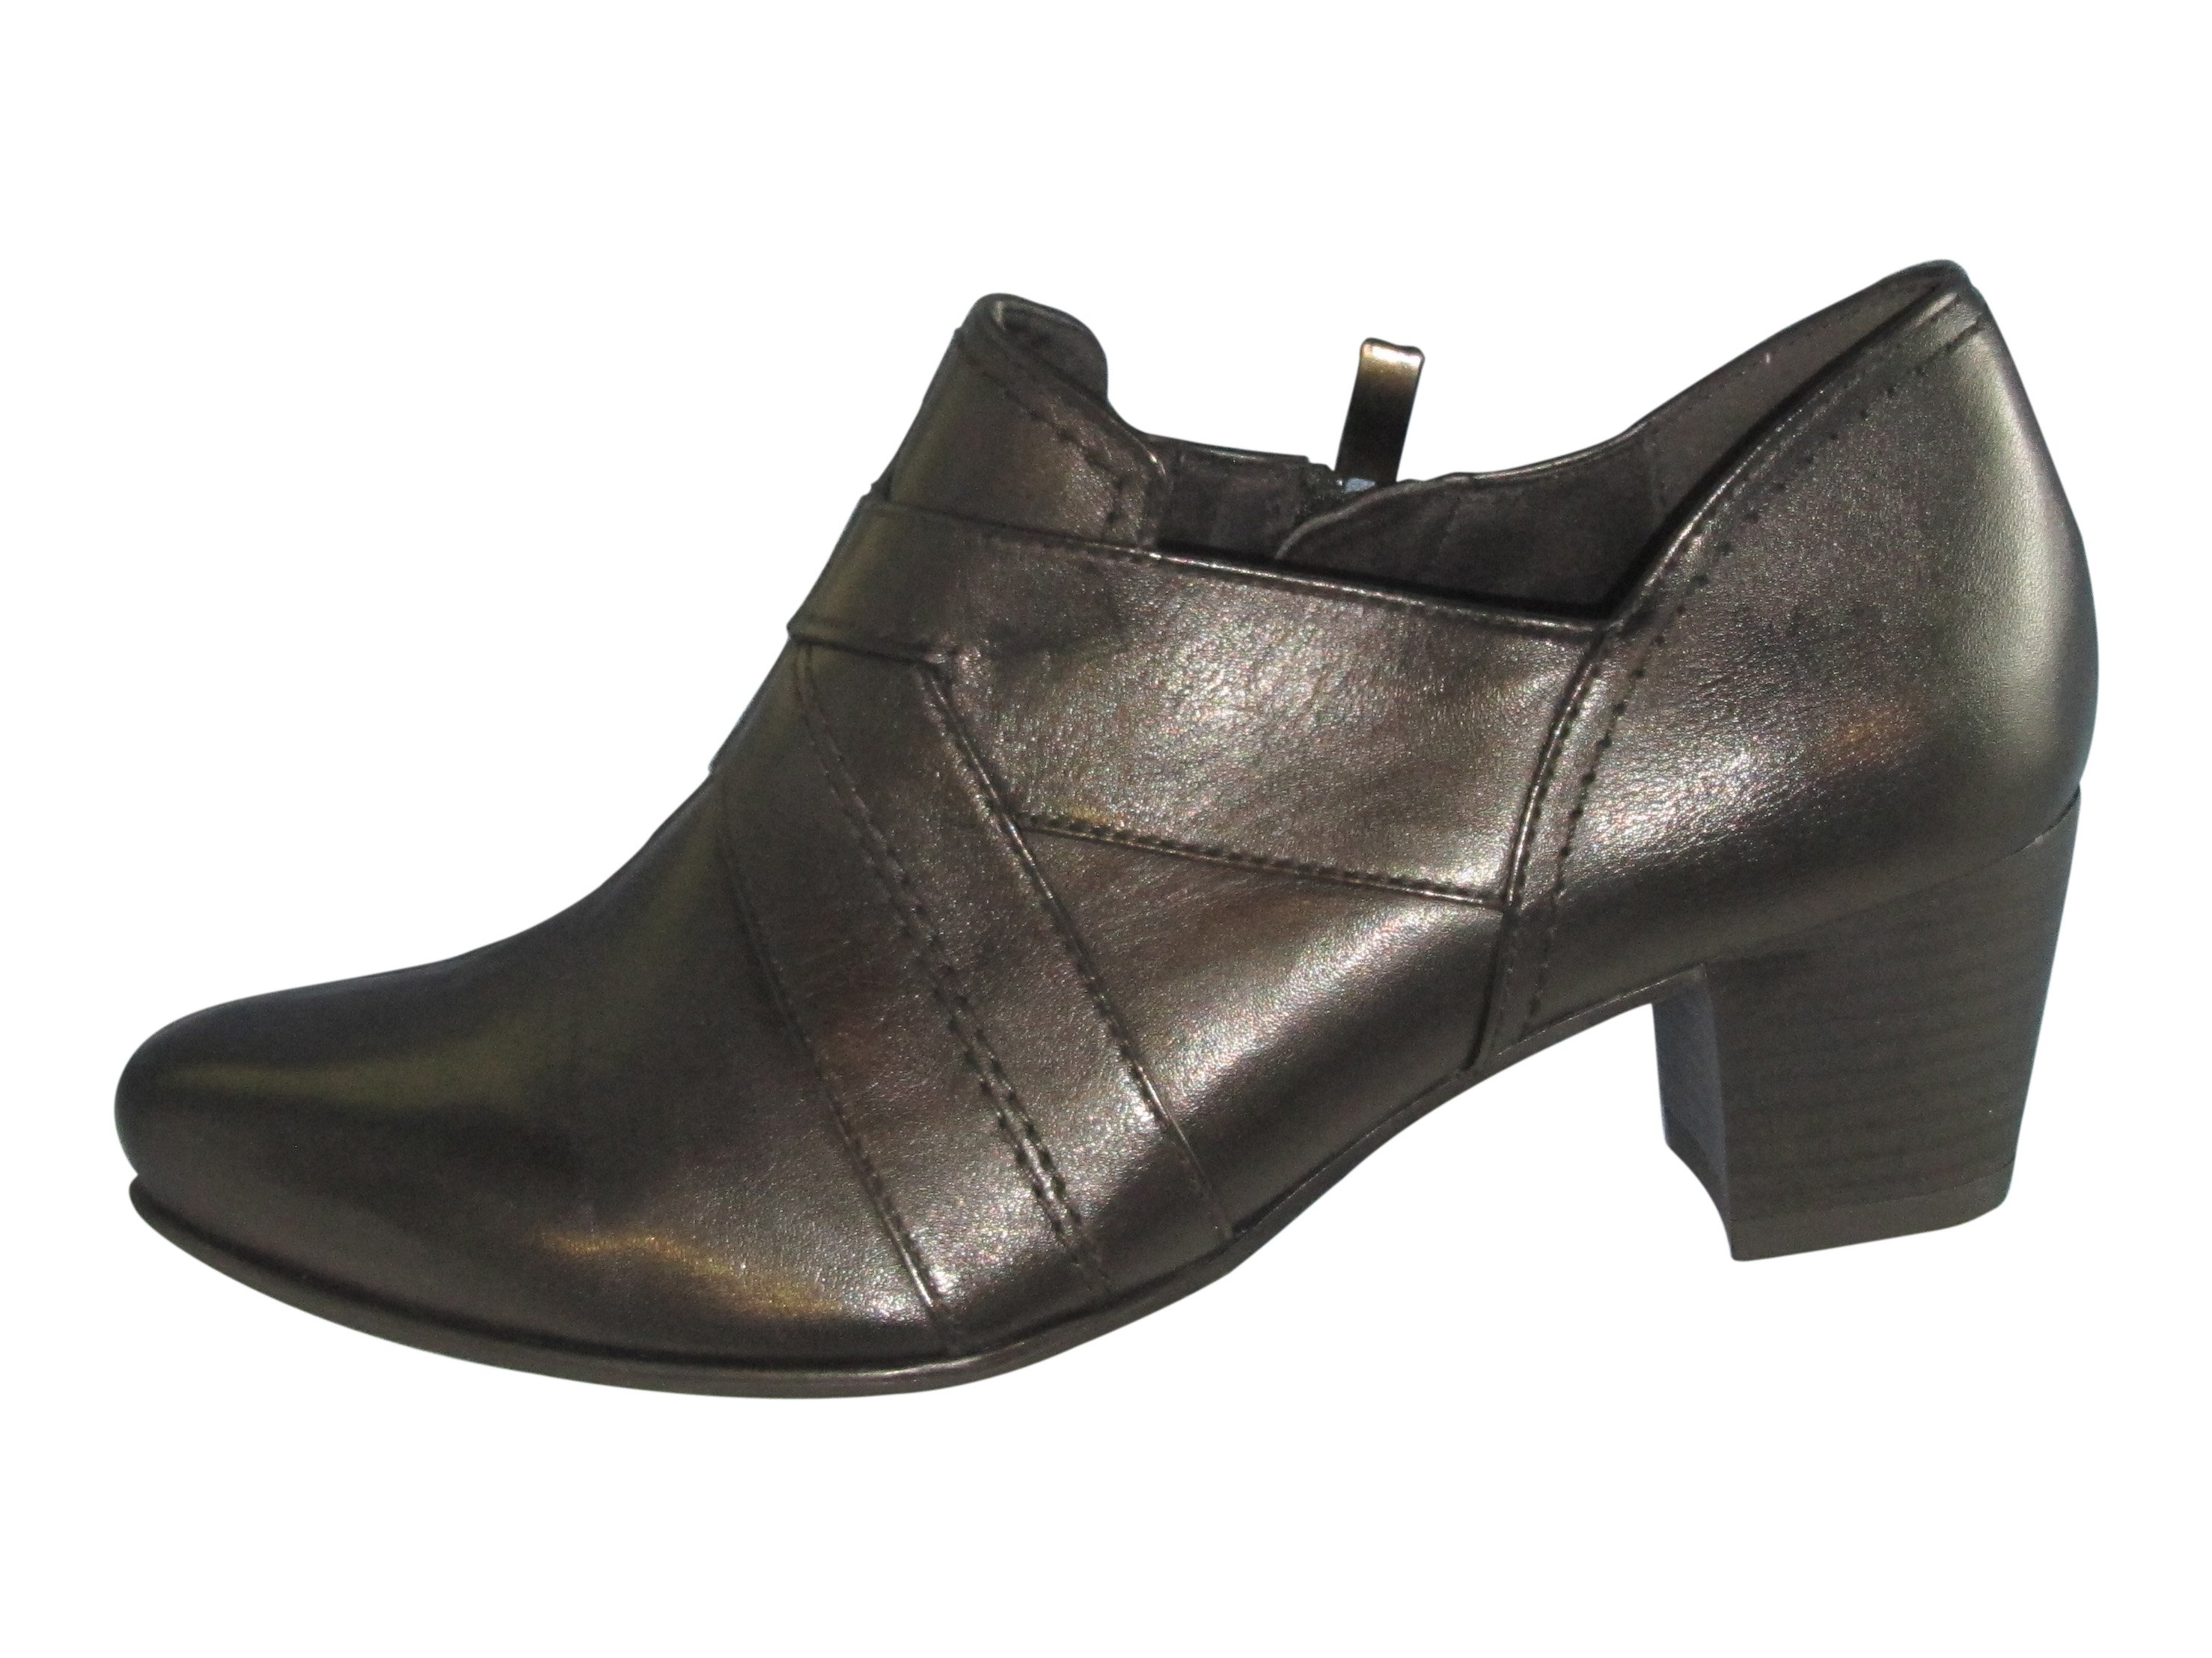 KUDOS GINO VENTORI - WOMENS SHOES-SHOES - low to flat : Shirley's Shoes ...